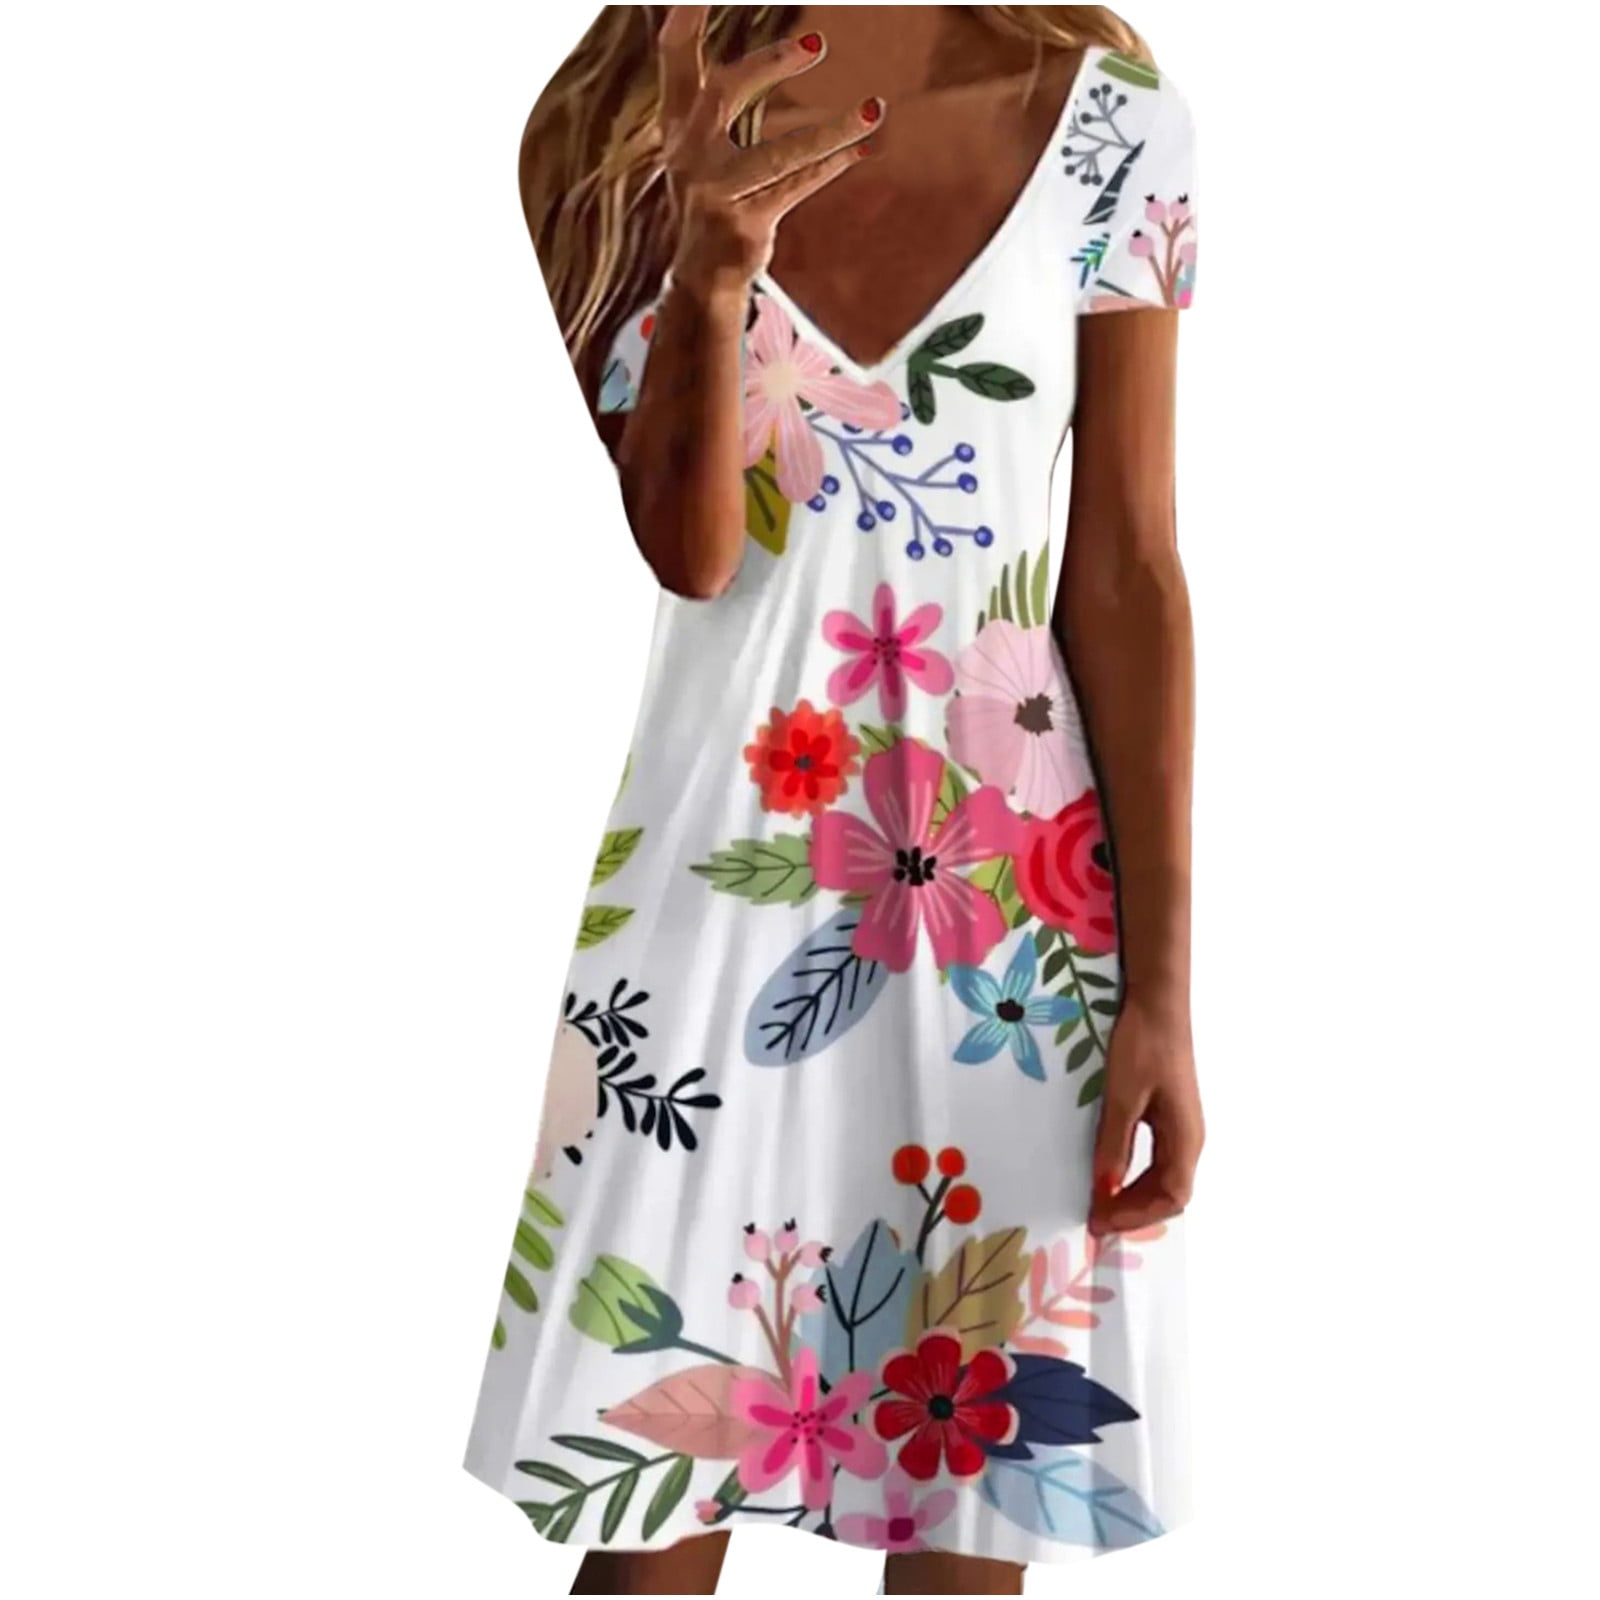 Uppada Linen Dress for Women Casual Summer Plus Size Midi Dress Short Sleeve V Neck Boho Loose Comfy Solid Color Dress 